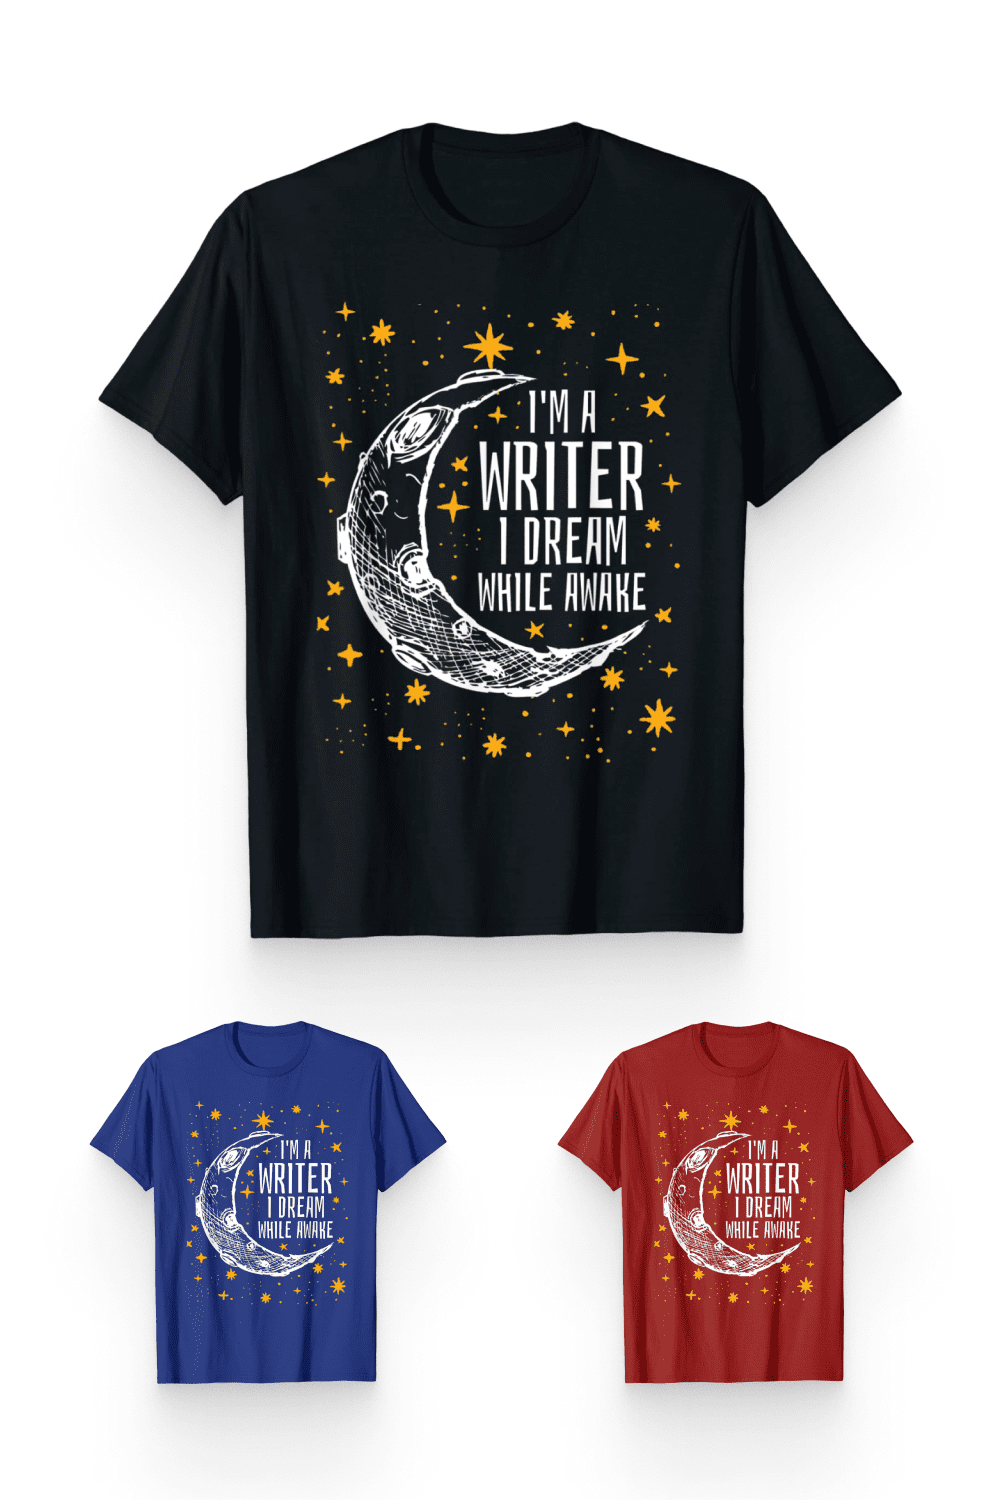 T-shirt with text I'm a Writer I Dream While Awake.